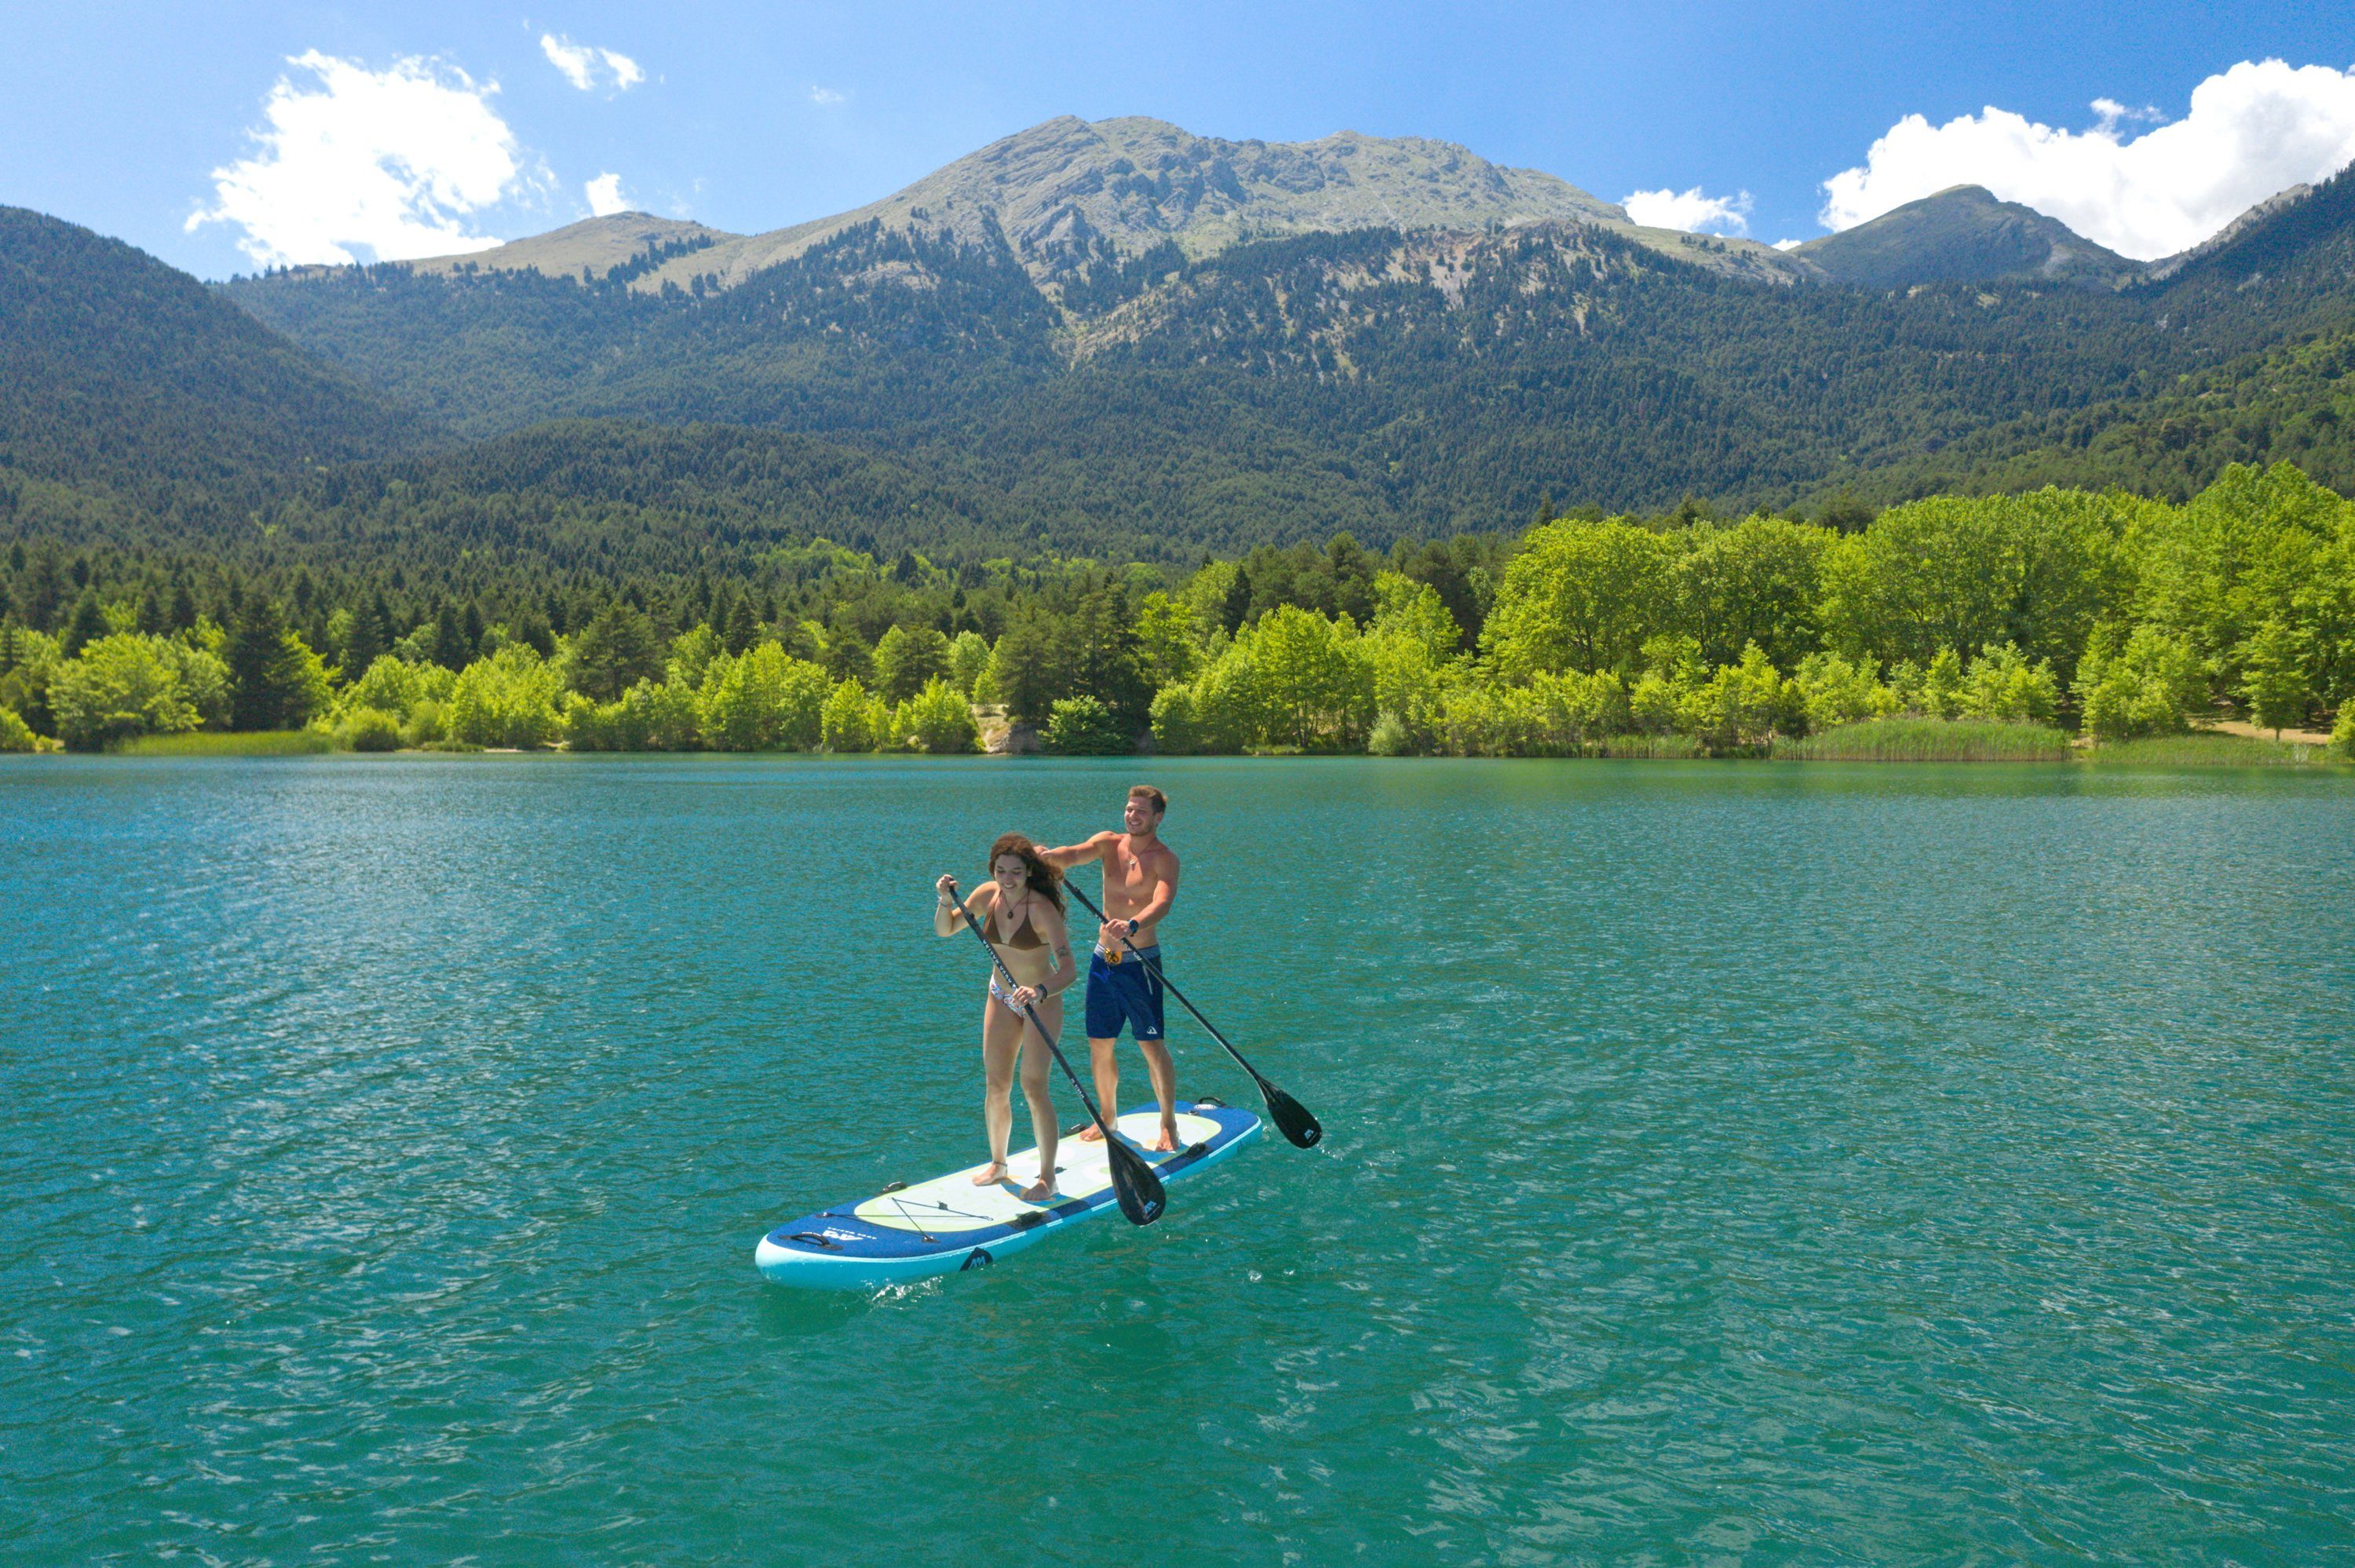 mit Super Paddelboard, Paddel, (SUP-Set, 12'2” Set SUP-Board Paddle Alu Board Marina Inflatable mit Stand-Up SUP Family Aqua Paddel) Trip